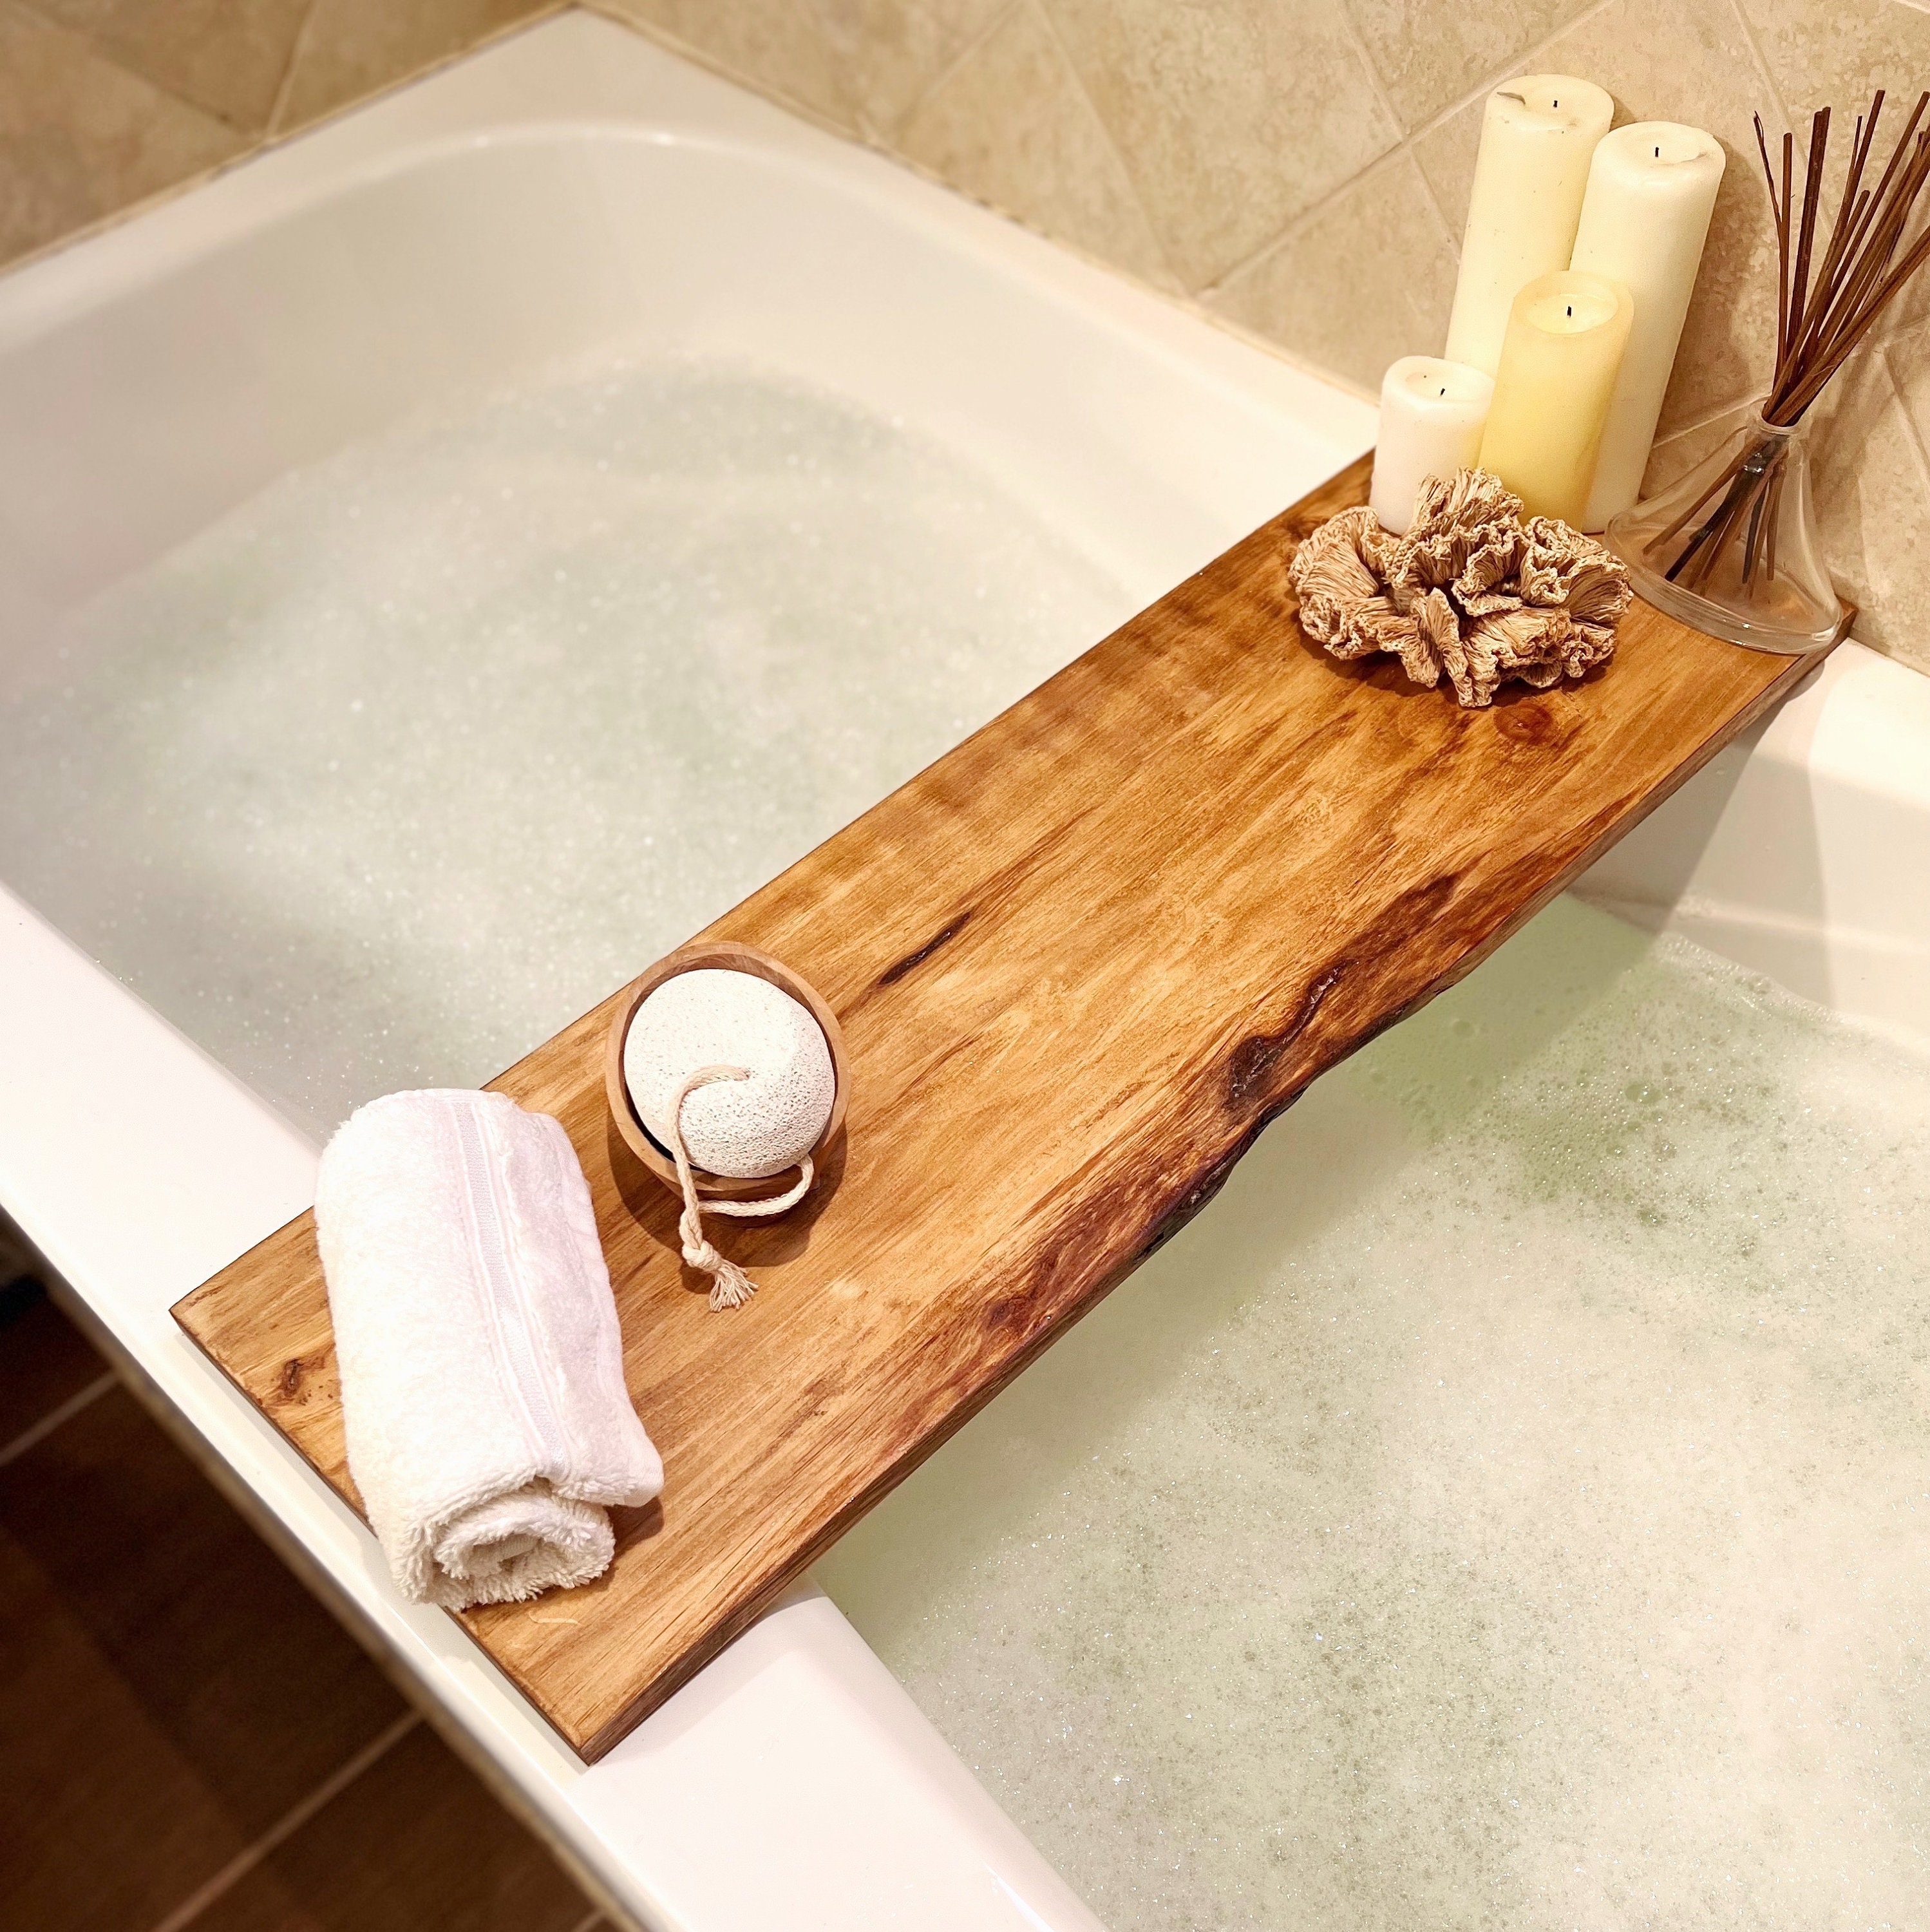 Slatted Wood Bathtub Tray - Hearth & Hand™ with Magnolia